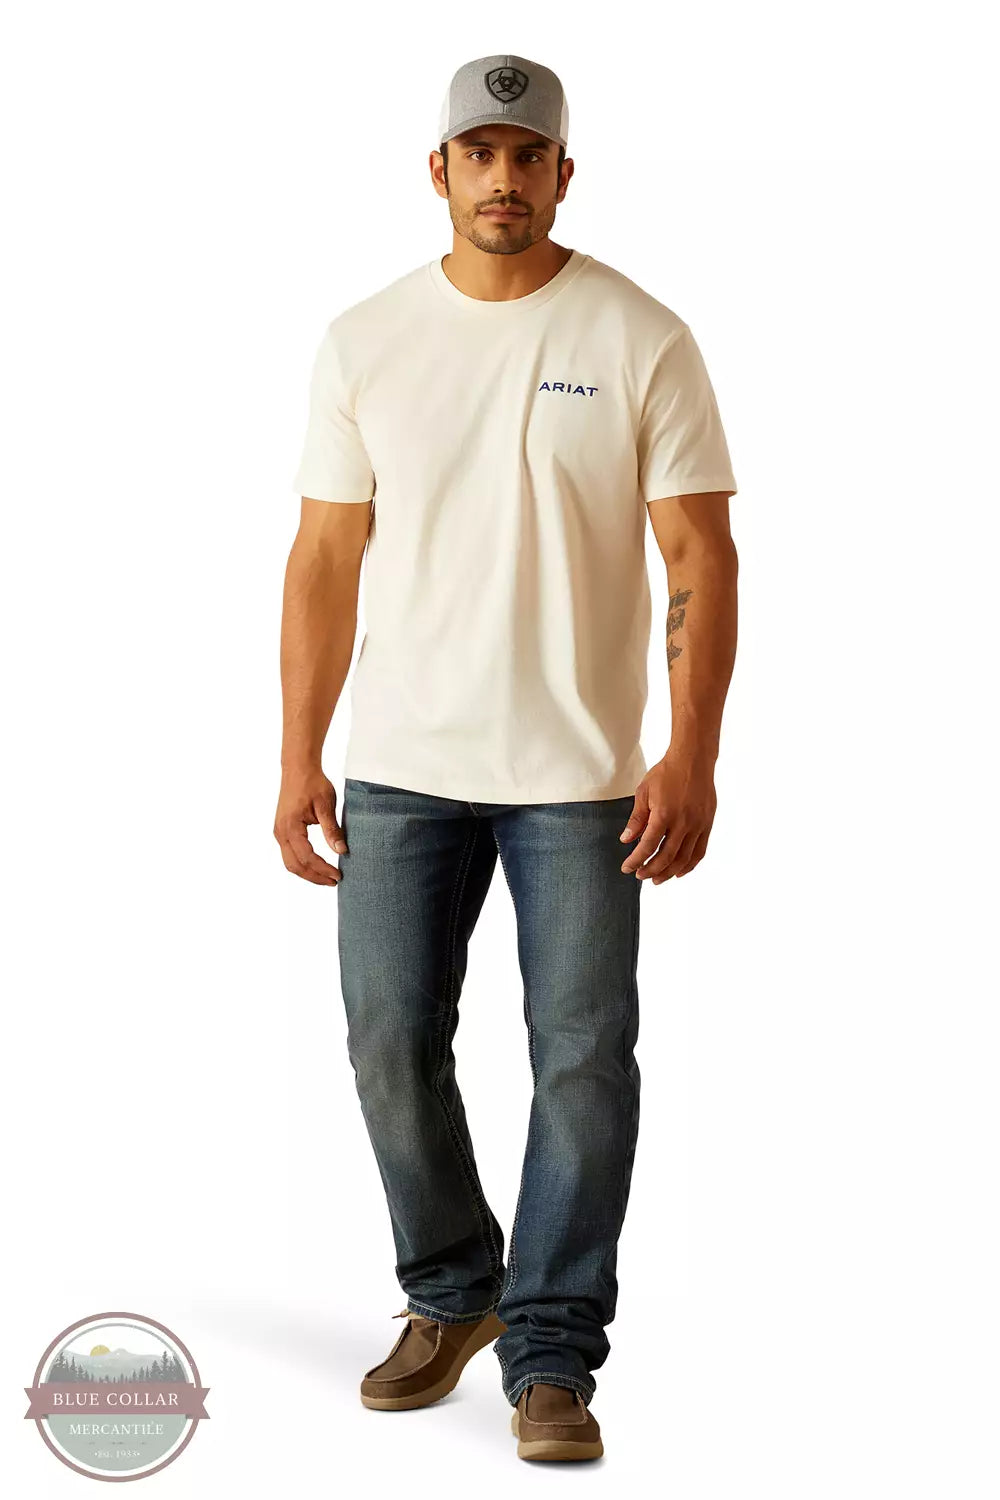 Ariat 10051454 Ariat Logo T-Shirt in Off White Full View